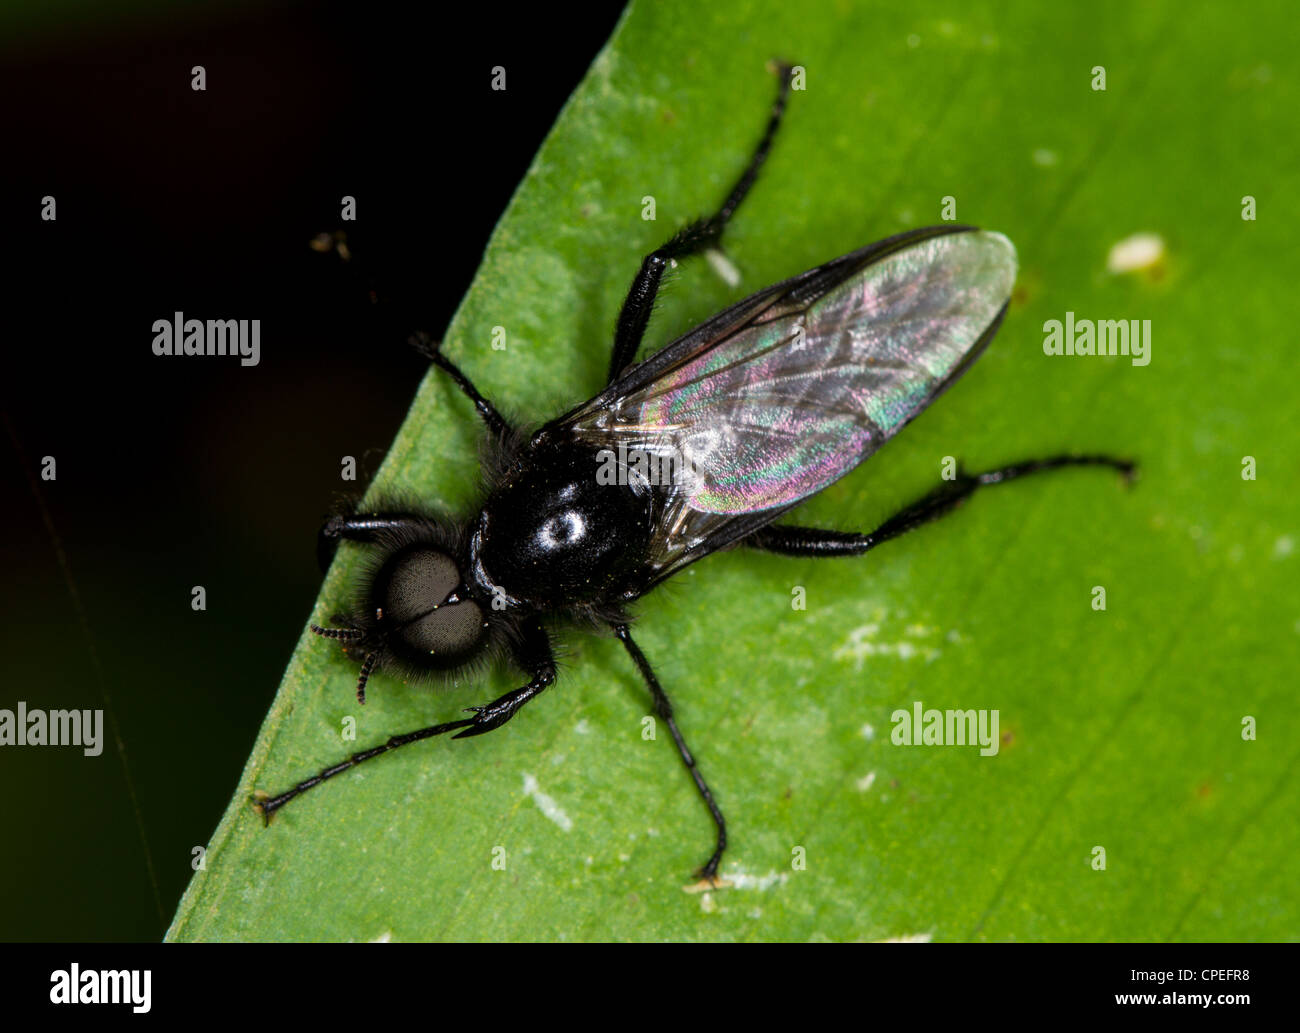 Male St. Mark's fly (Bibio marci) Stock Photo